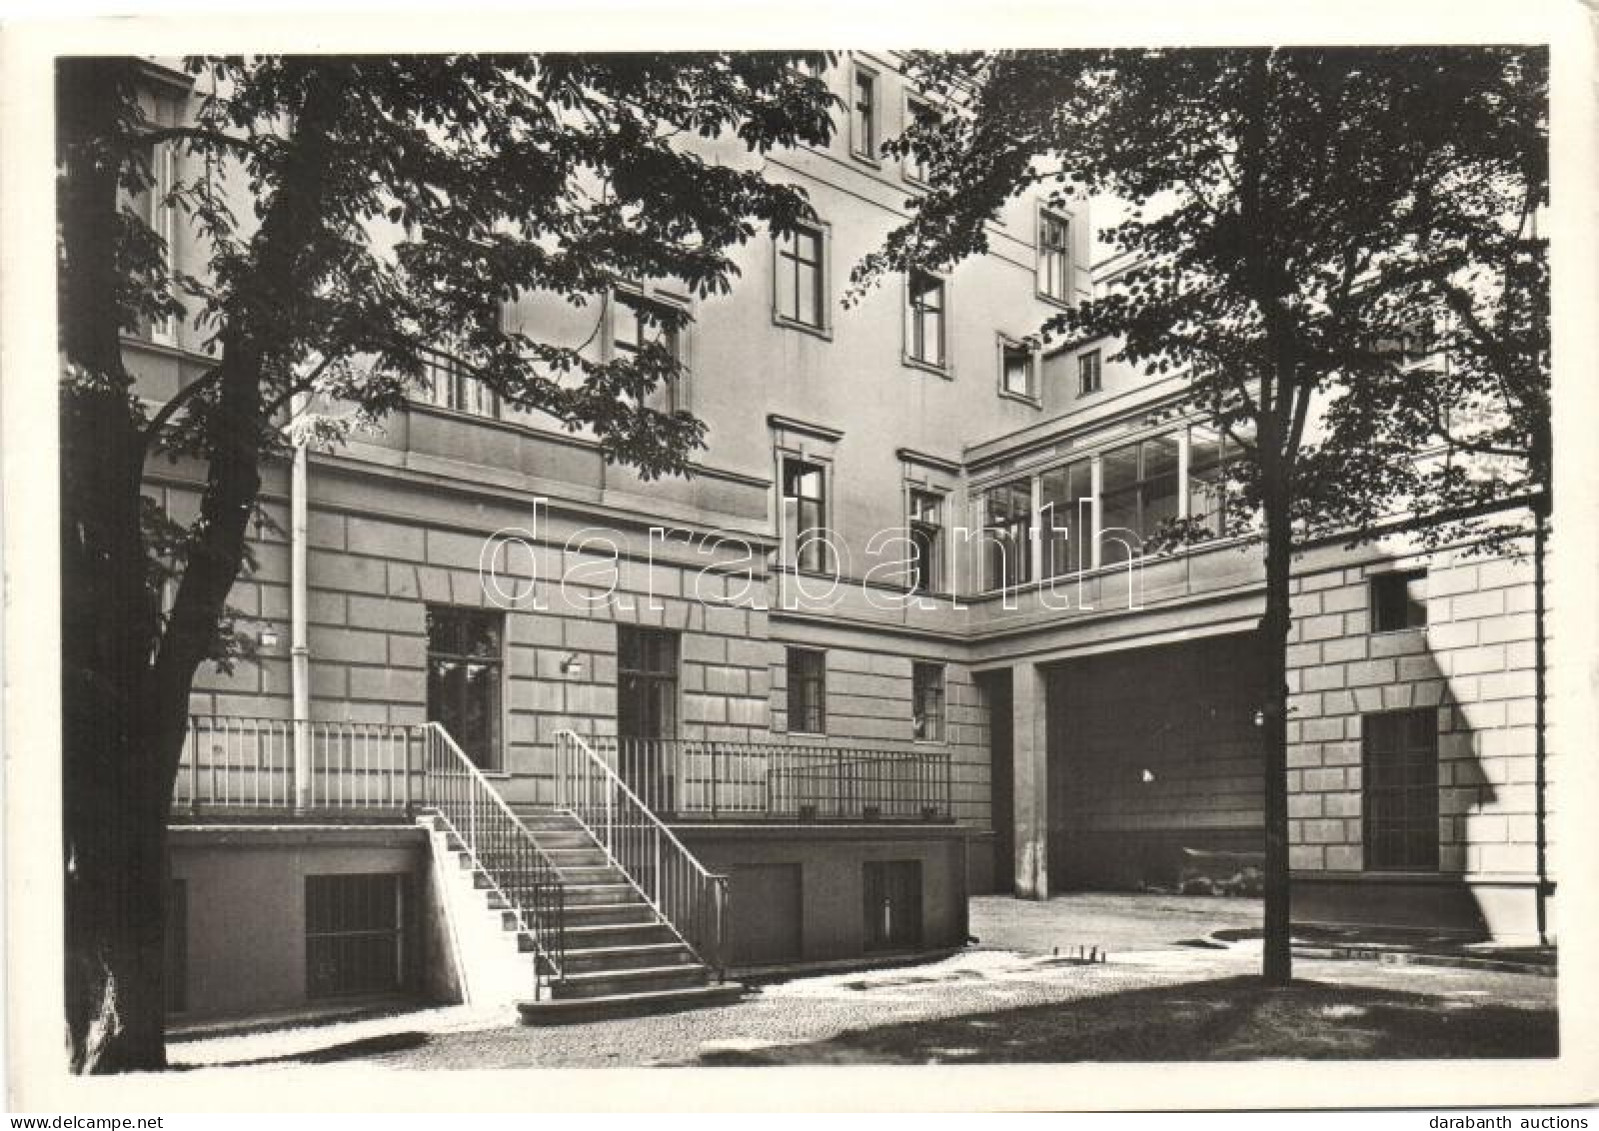 ** T2/T3 Berlin, Dorotheenstrasse 2., Collegium Hungaricum Courtyard, Hungarika (EK) - Non Classés